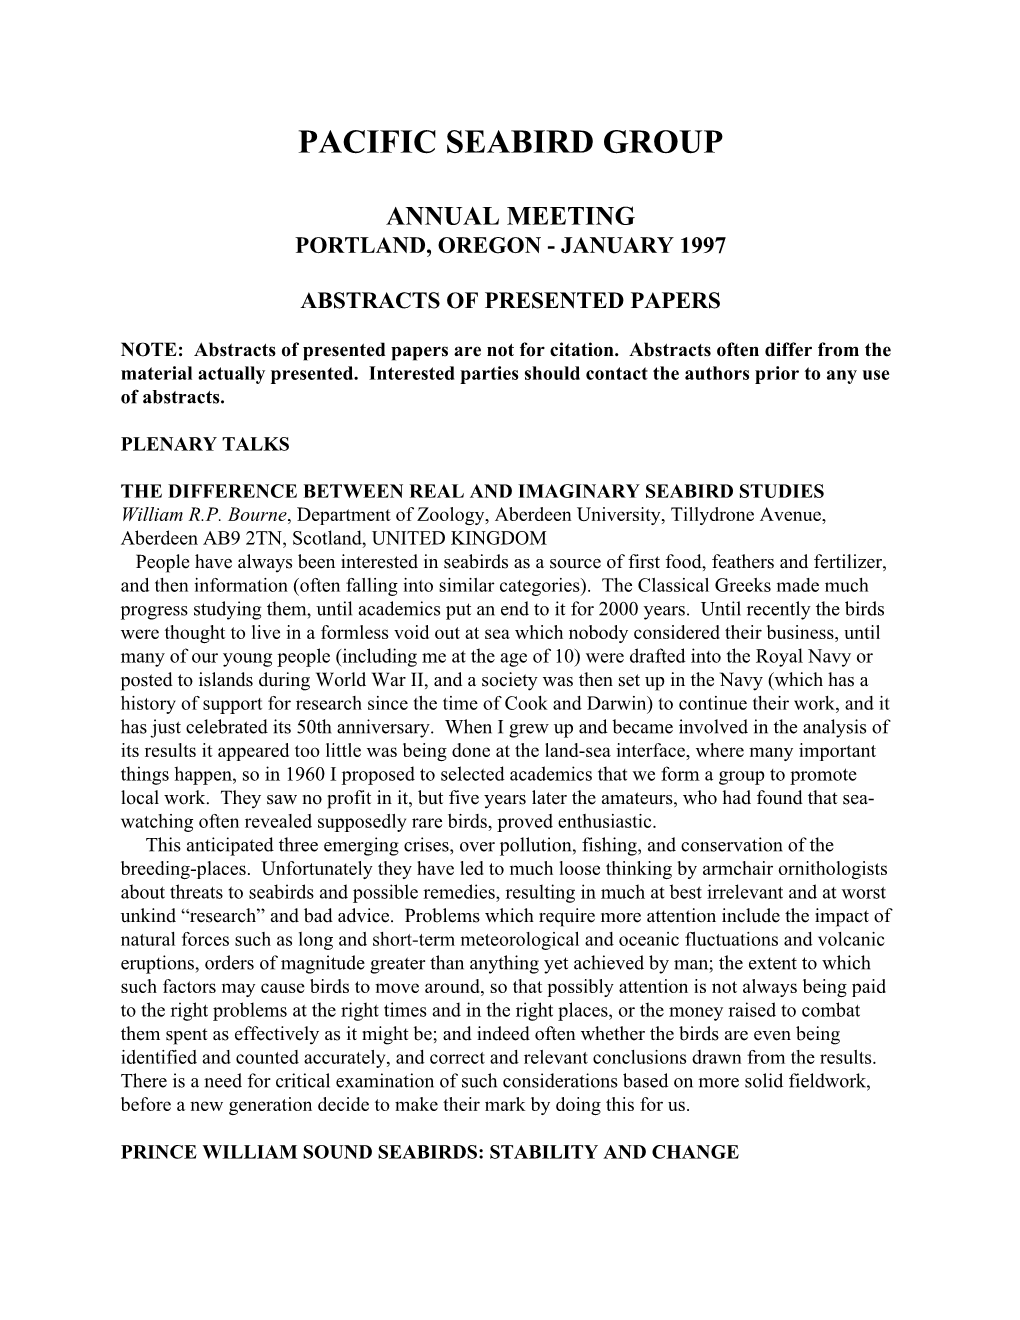 Pacific Seabird Group Annual Meeting